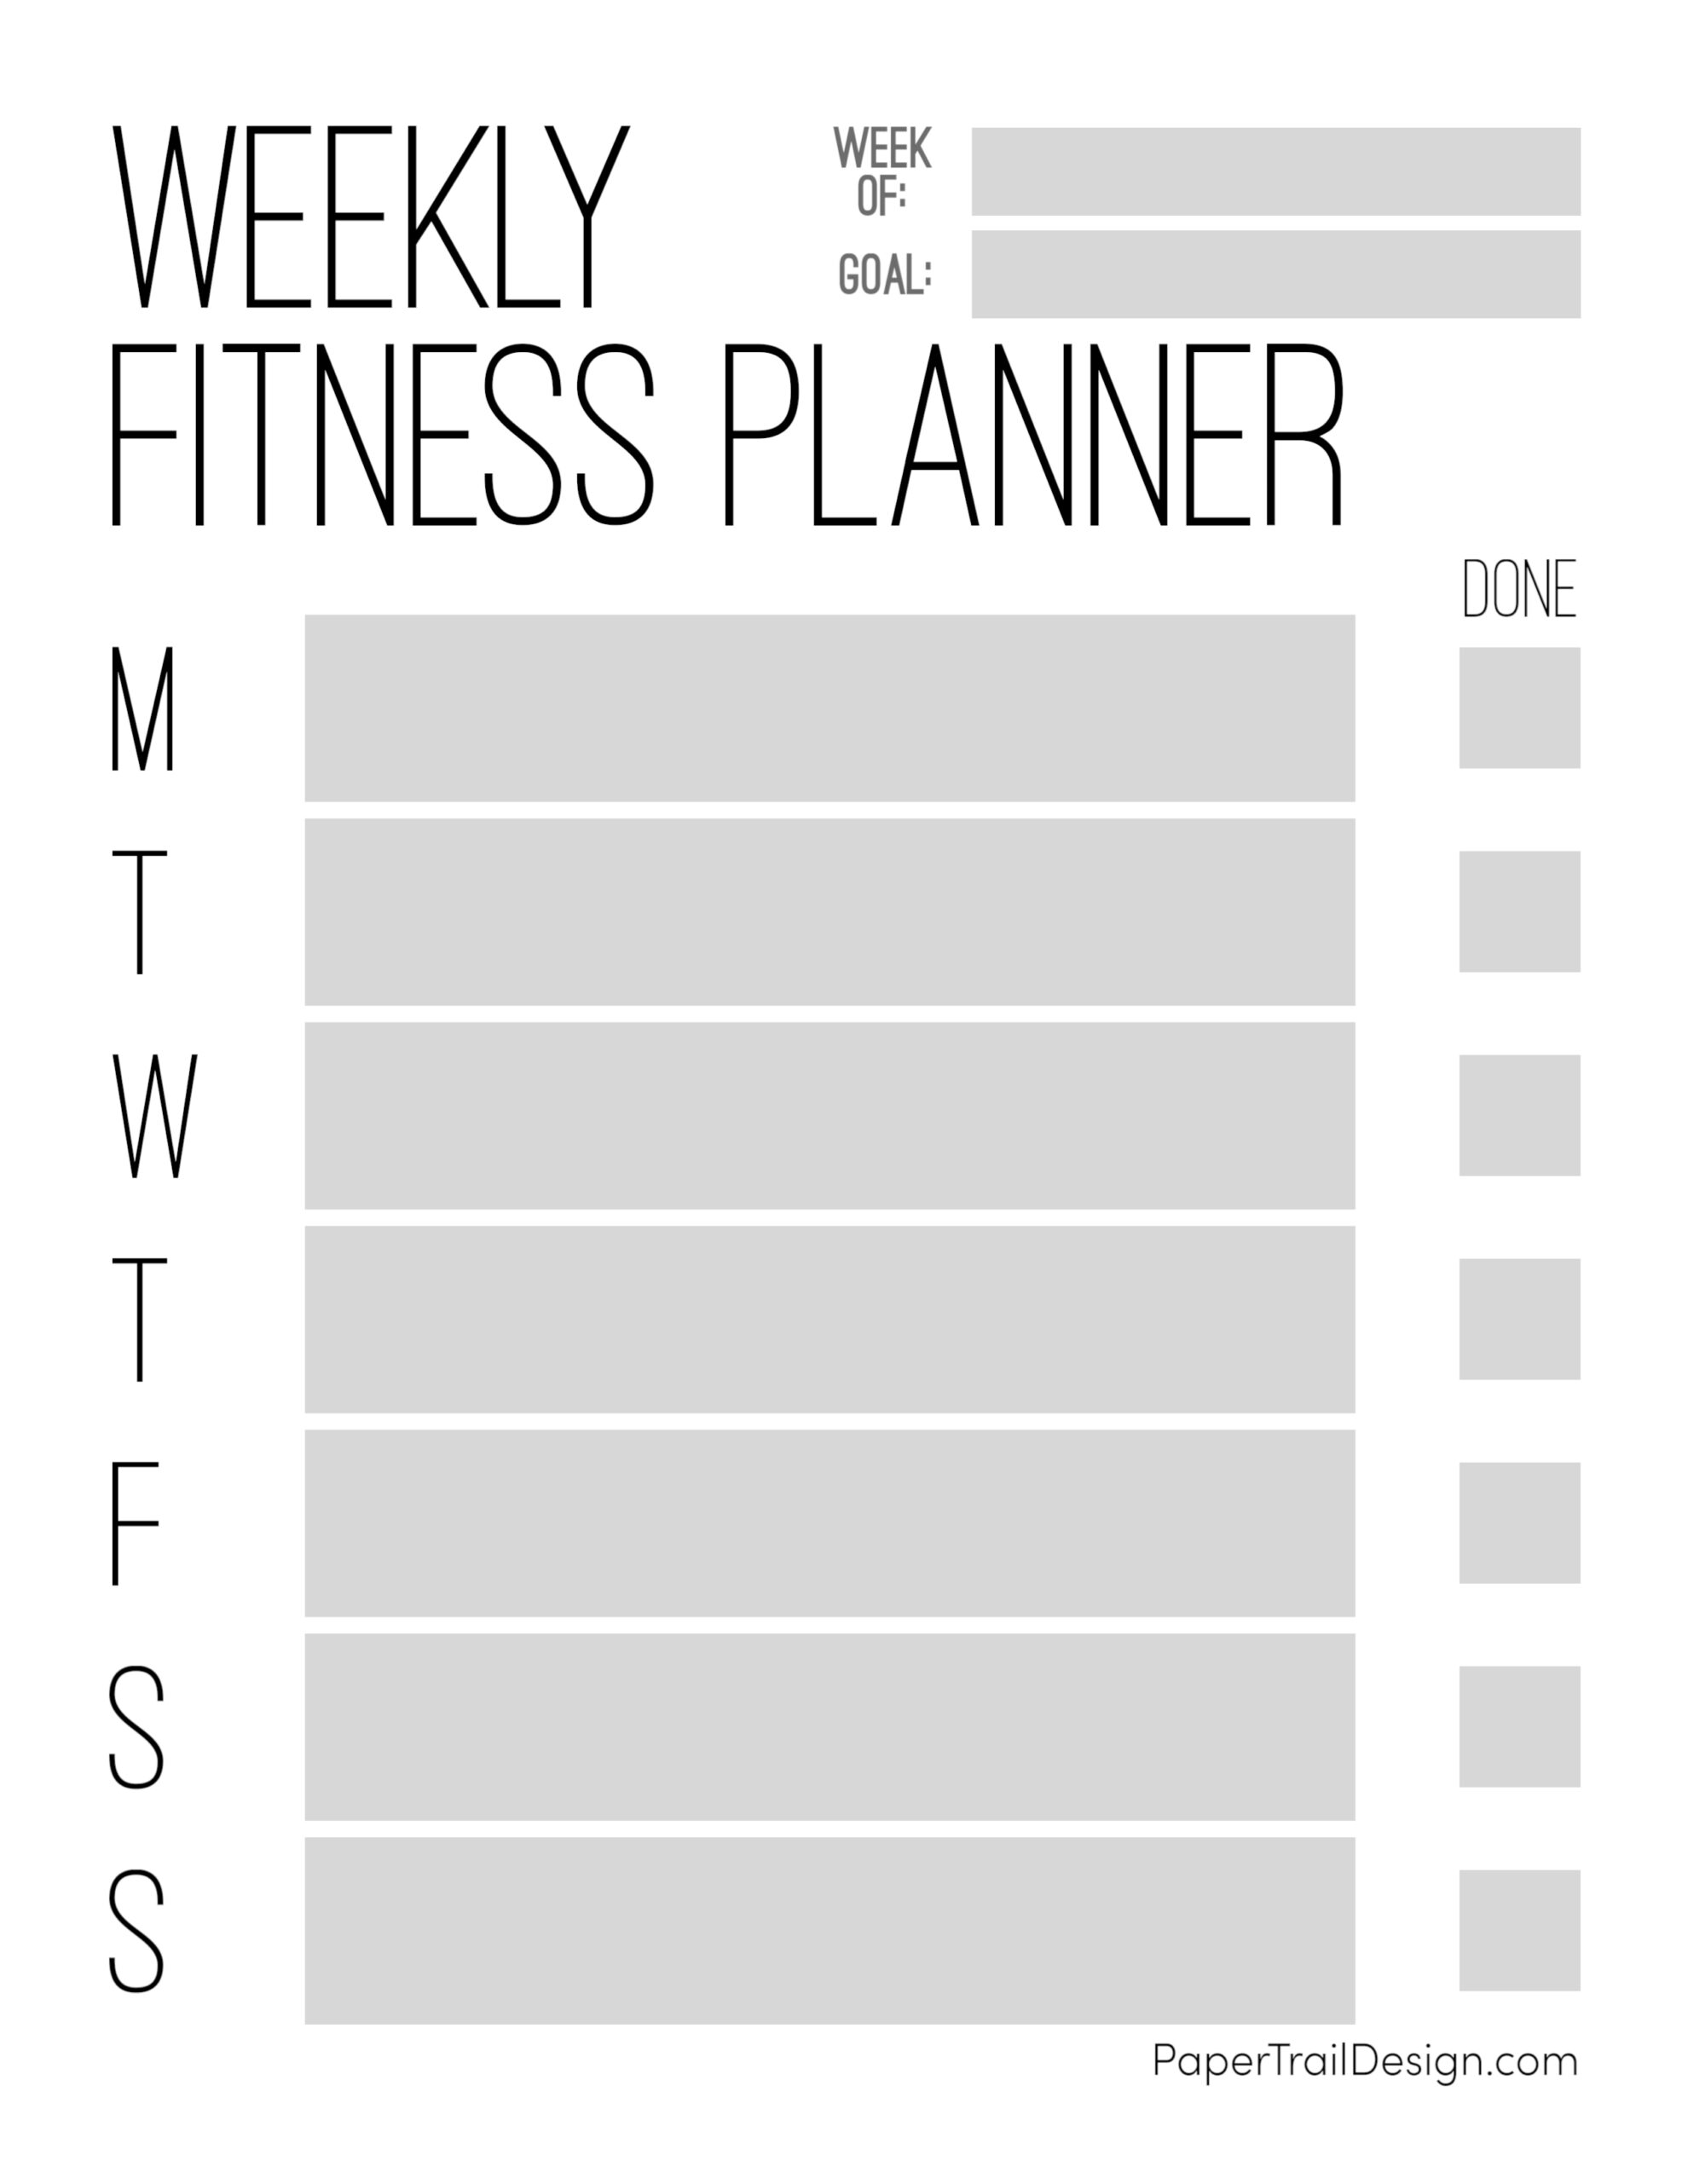 Fitness Planner Free Printable Printable Templates